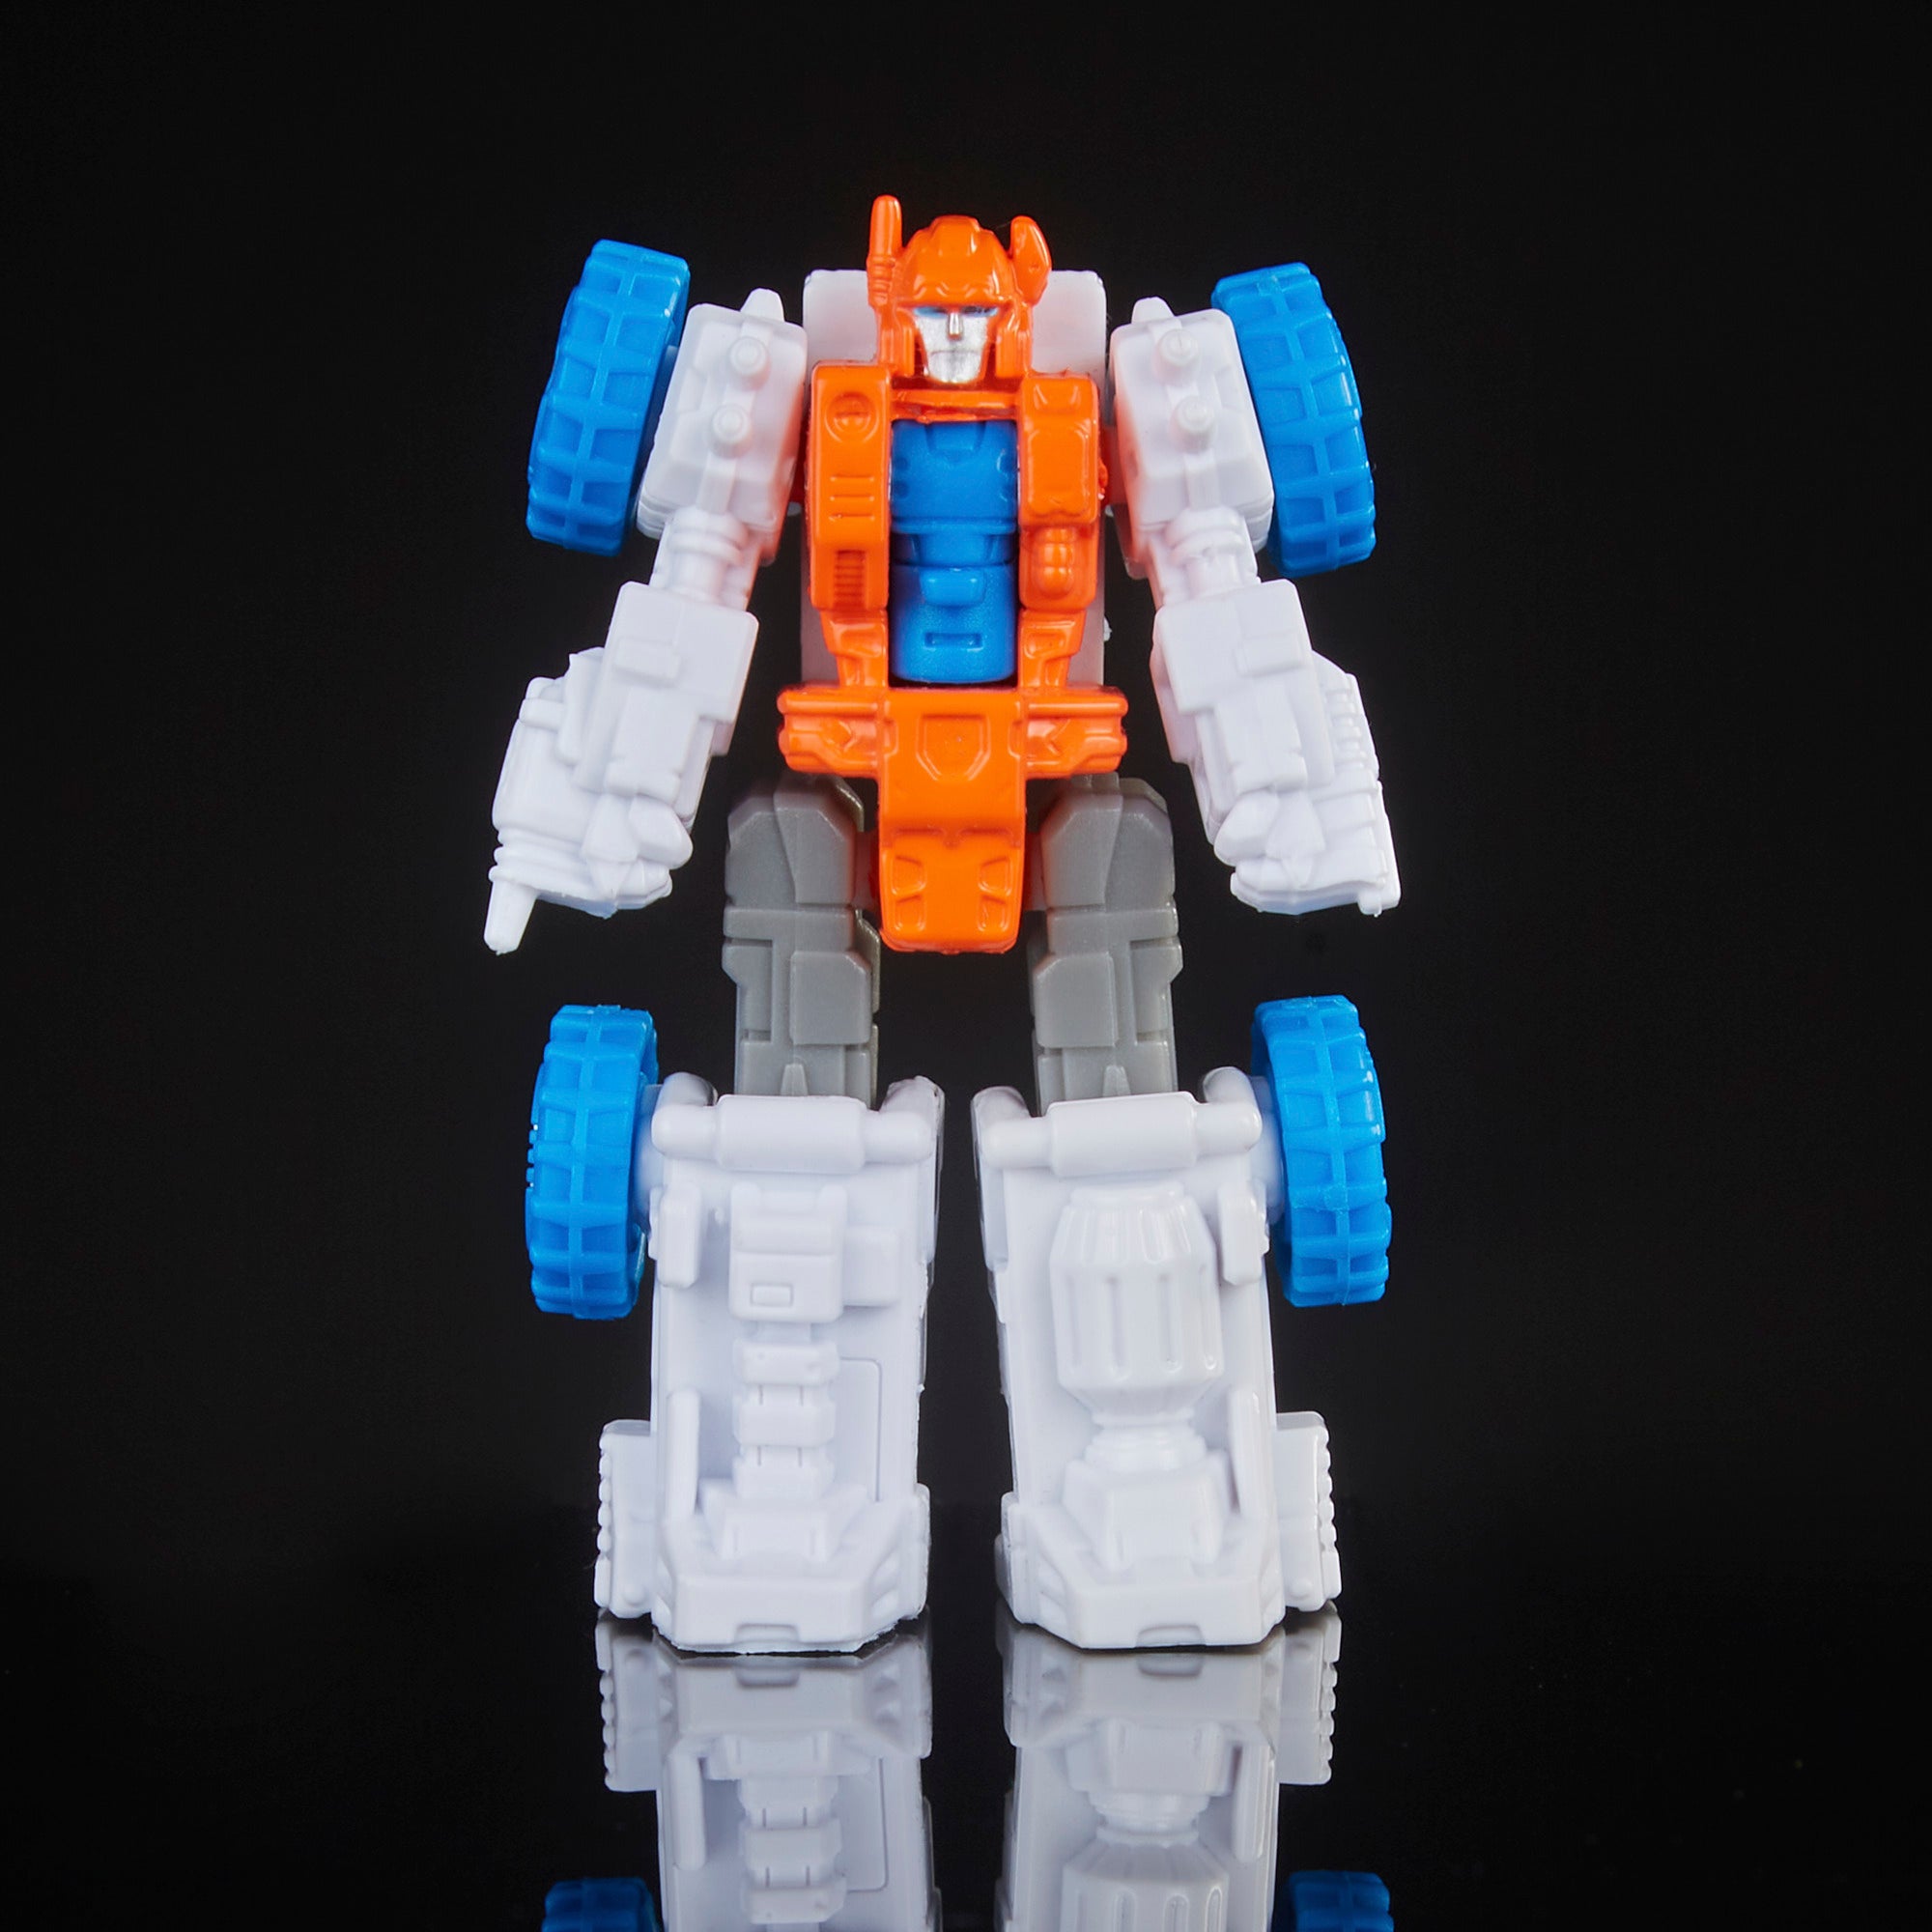 Transformers Legacy Generation Selects Titan Guardian Robot